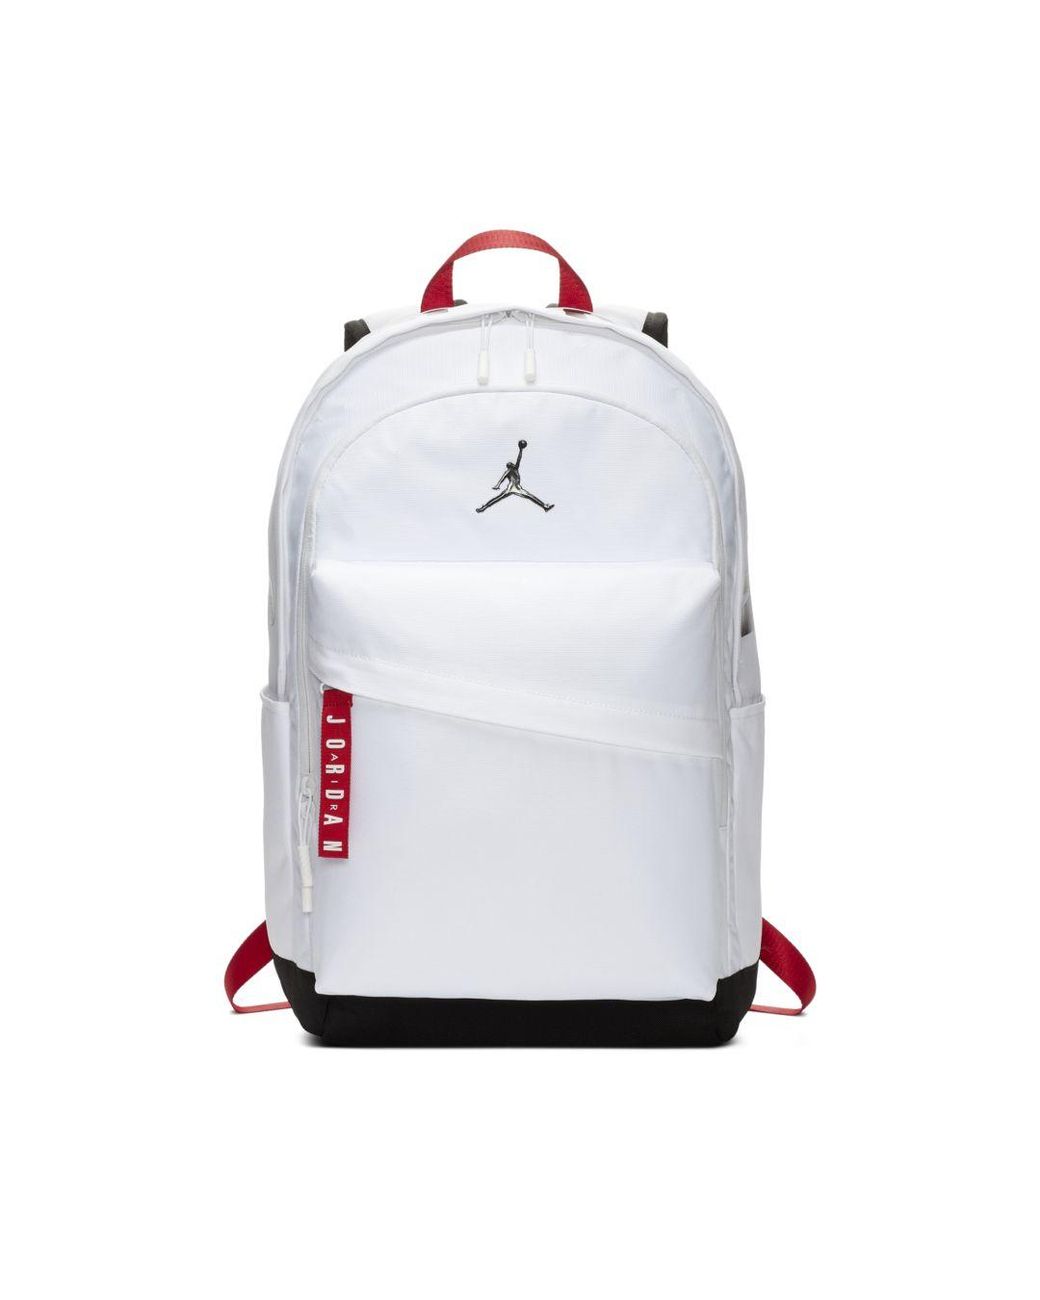 Nike Jordan Air Patrol Backpack in 